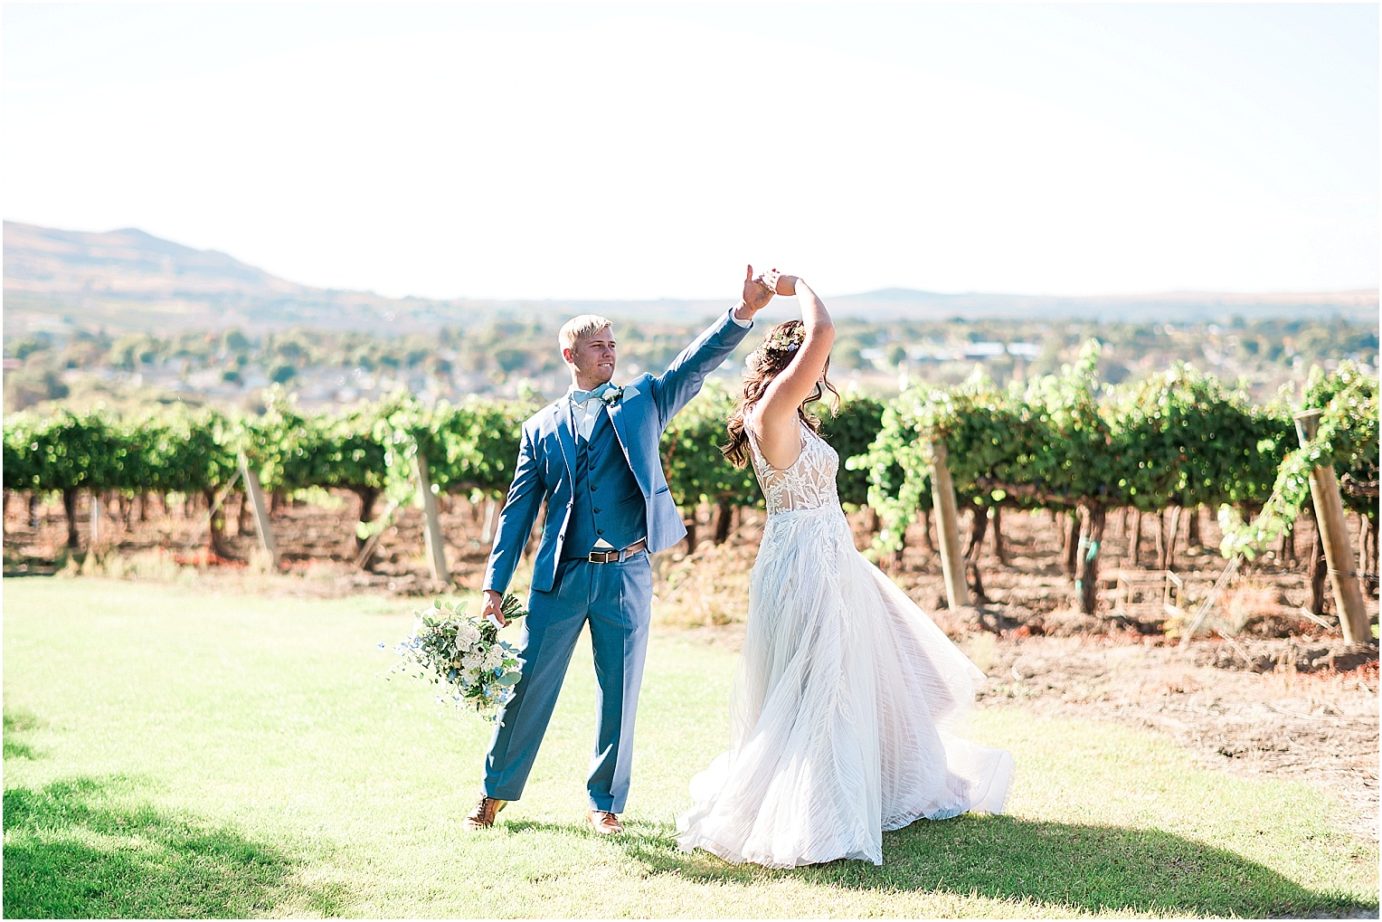 Terra Blanca Winery Wedding Benton City WA Nate and Jacqueline bride twirling